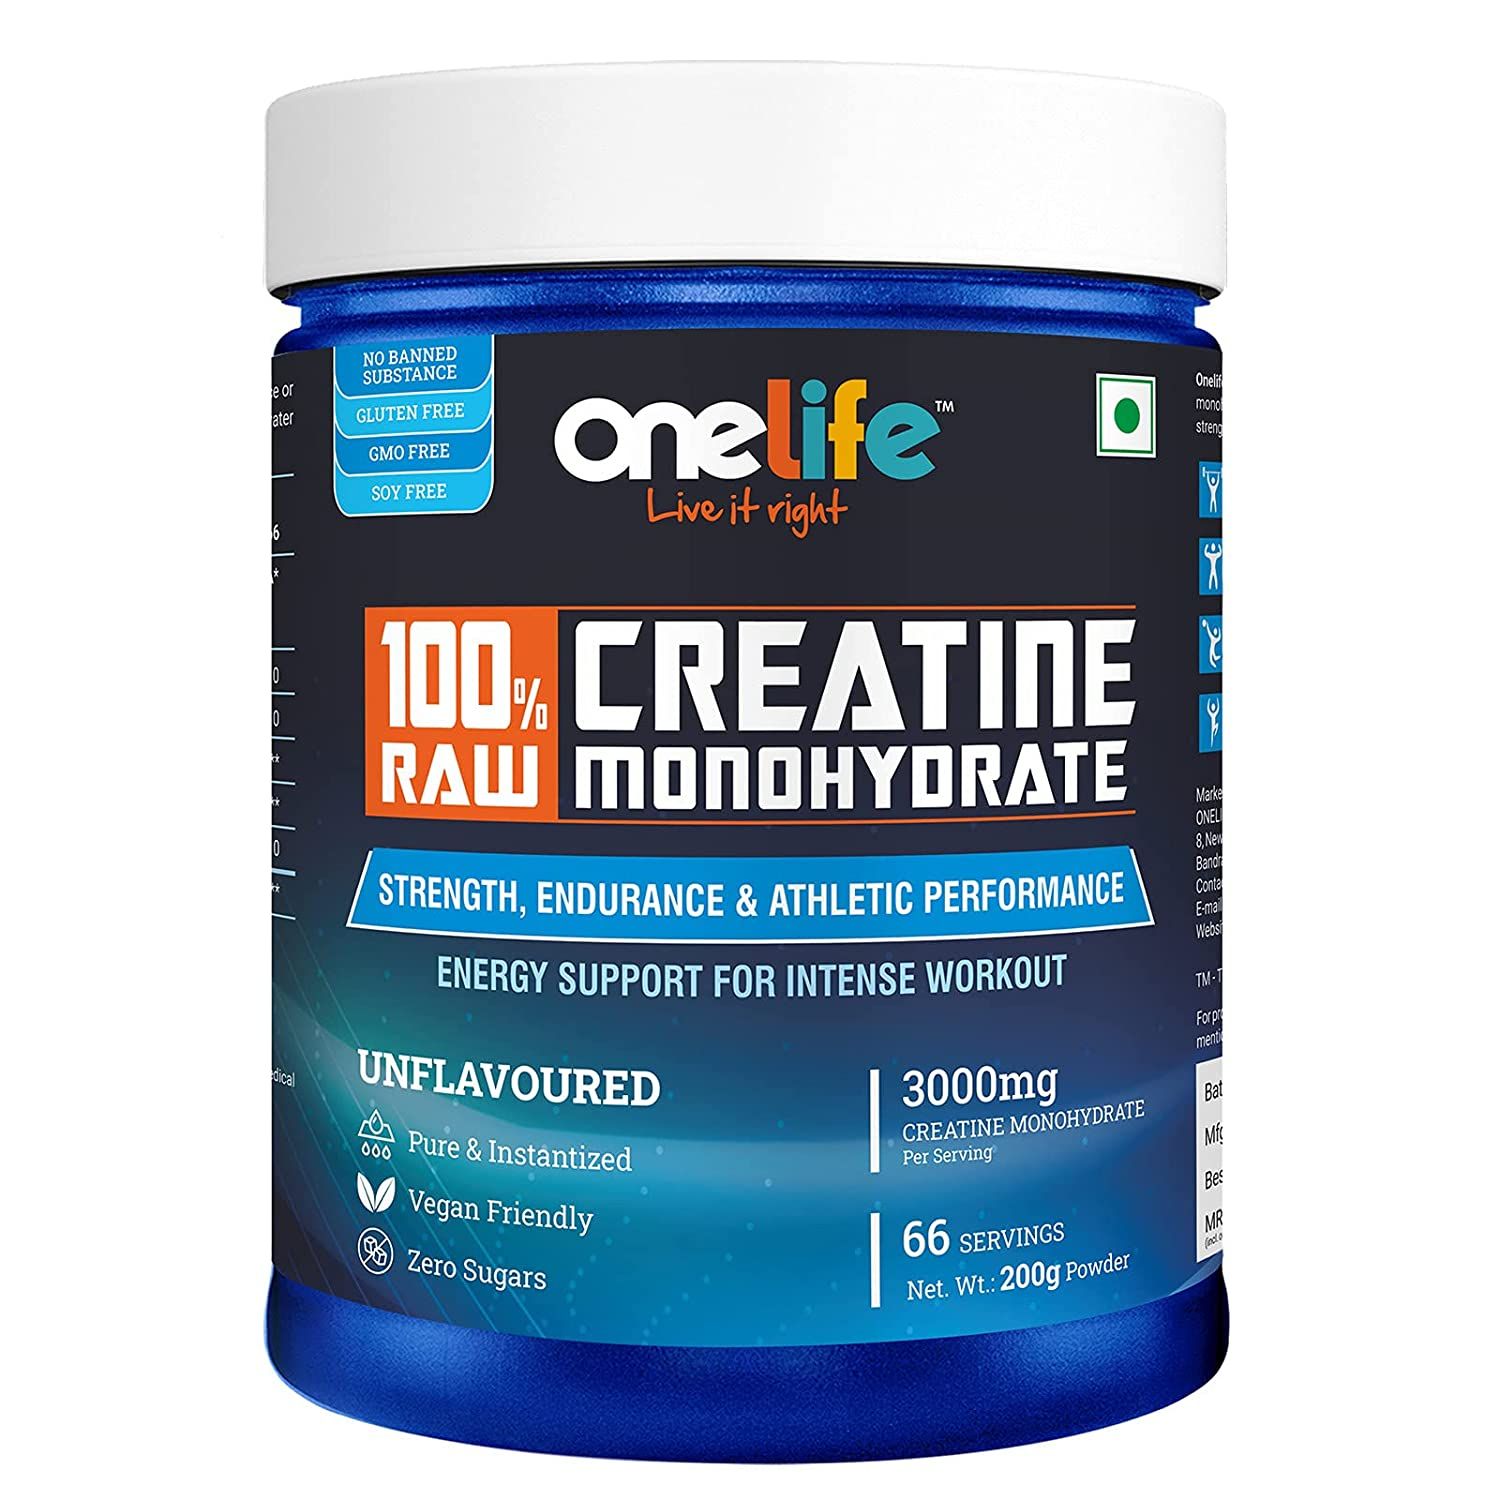 Onelife Creatine Monohydrate Image